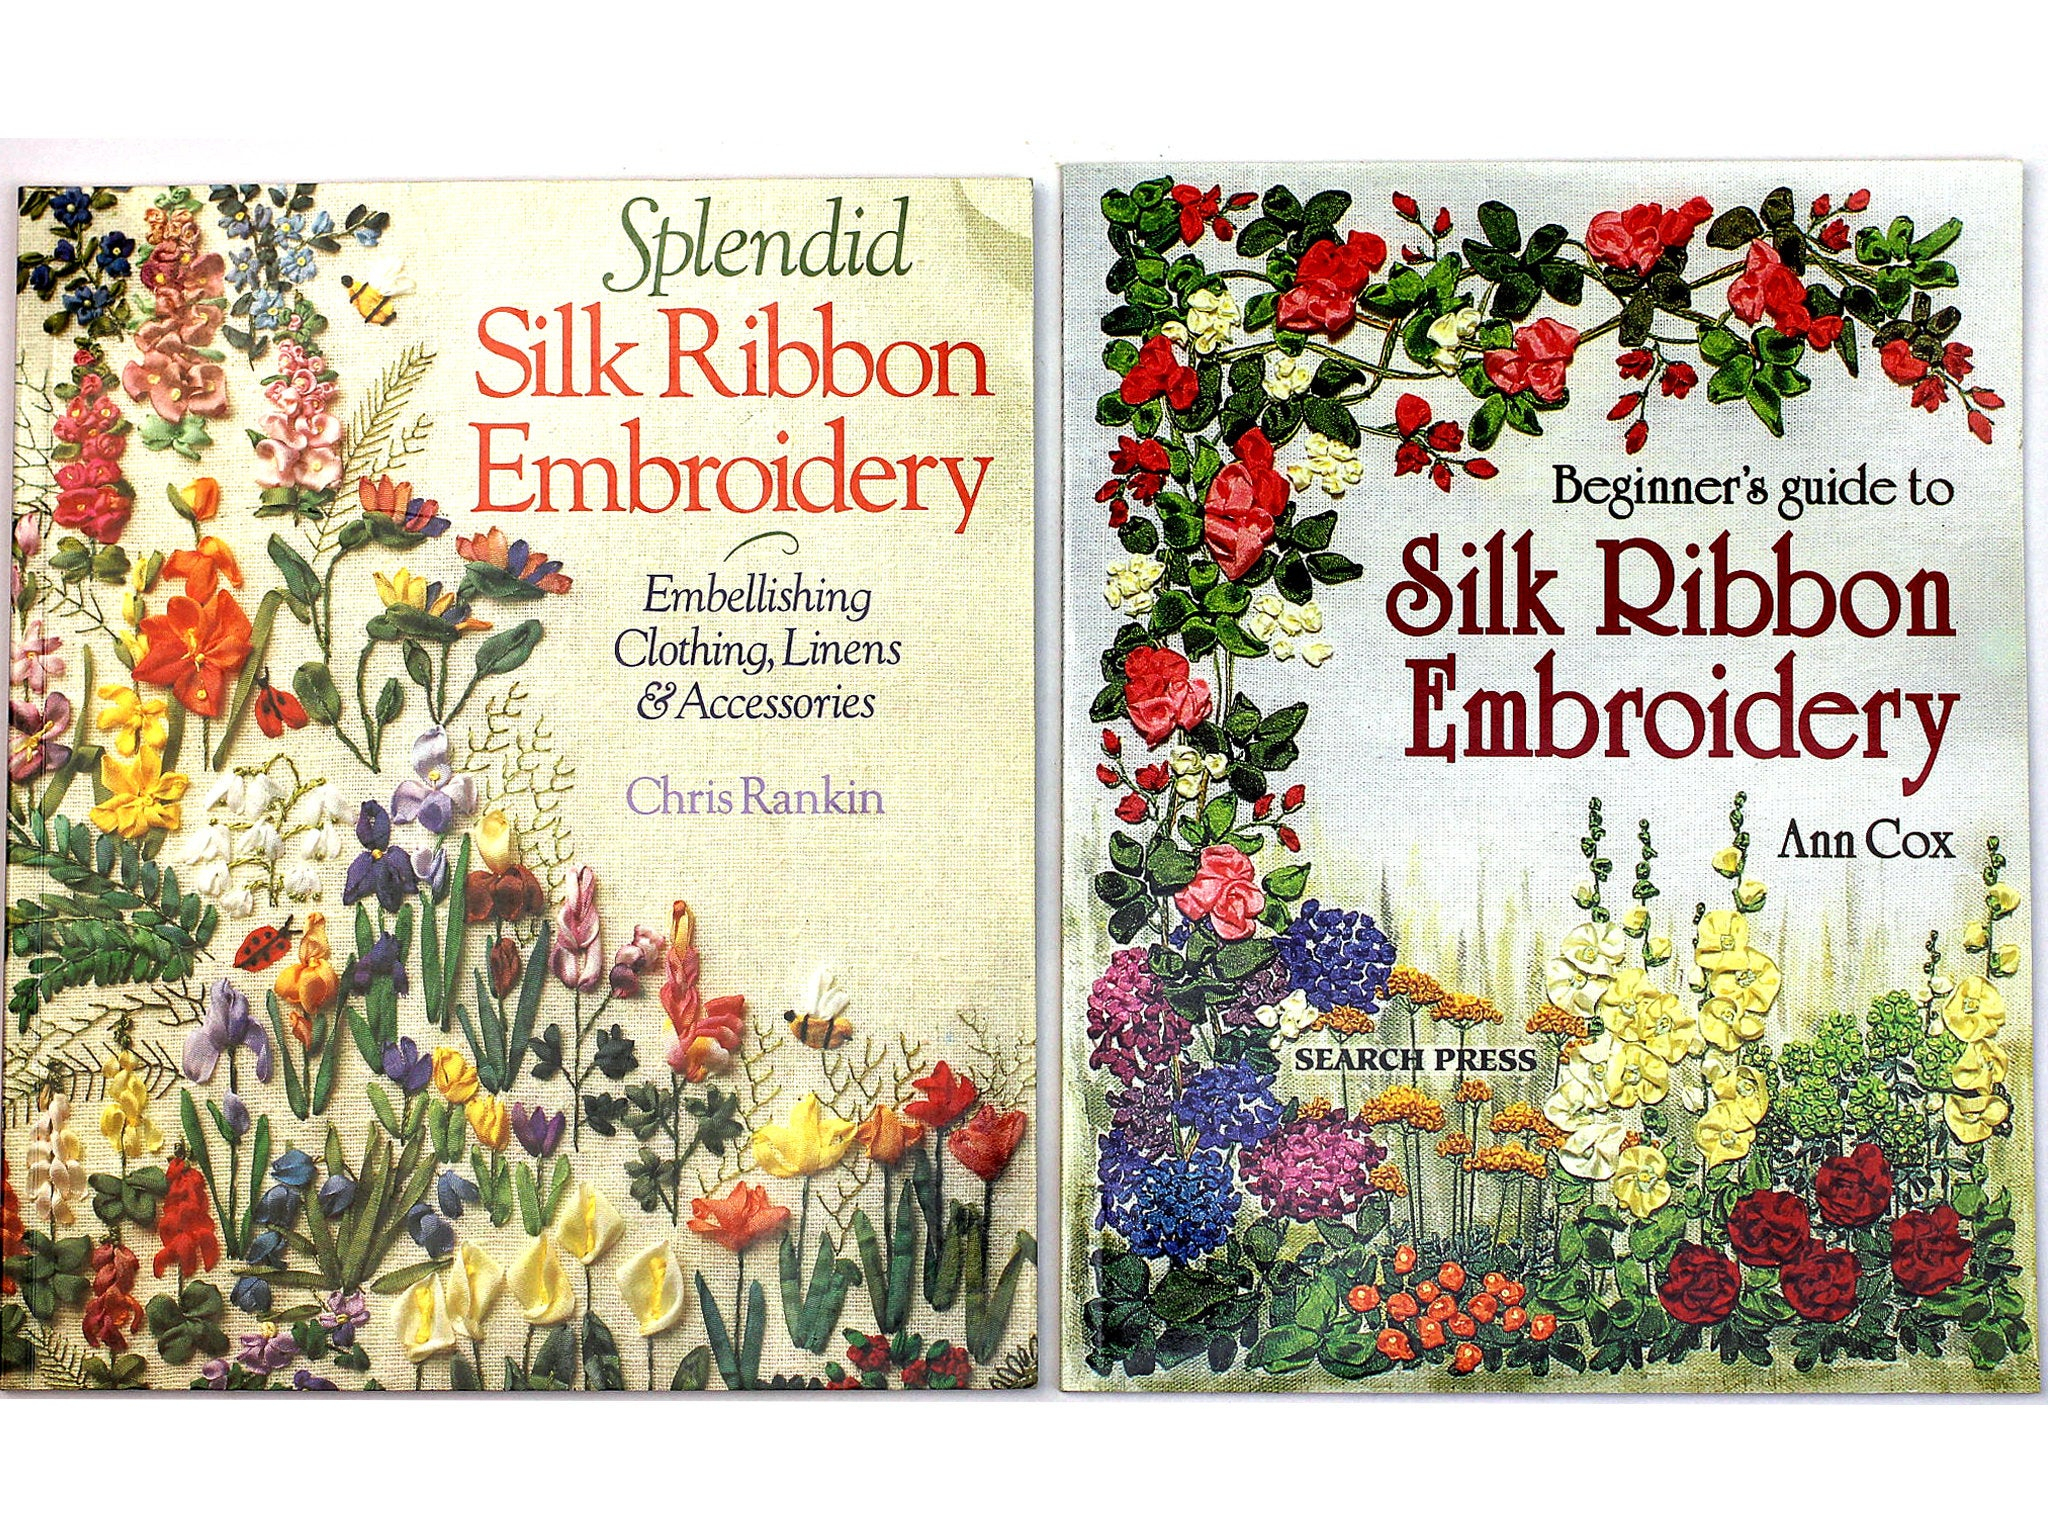 Ribbon Embroidery Patterns Splendid Silk Ribbon Embroidery Beginners Guide To Silk Ribbon Embroidery Ann Cox Chris Rankin Embroidery Books Embroidery Patterns